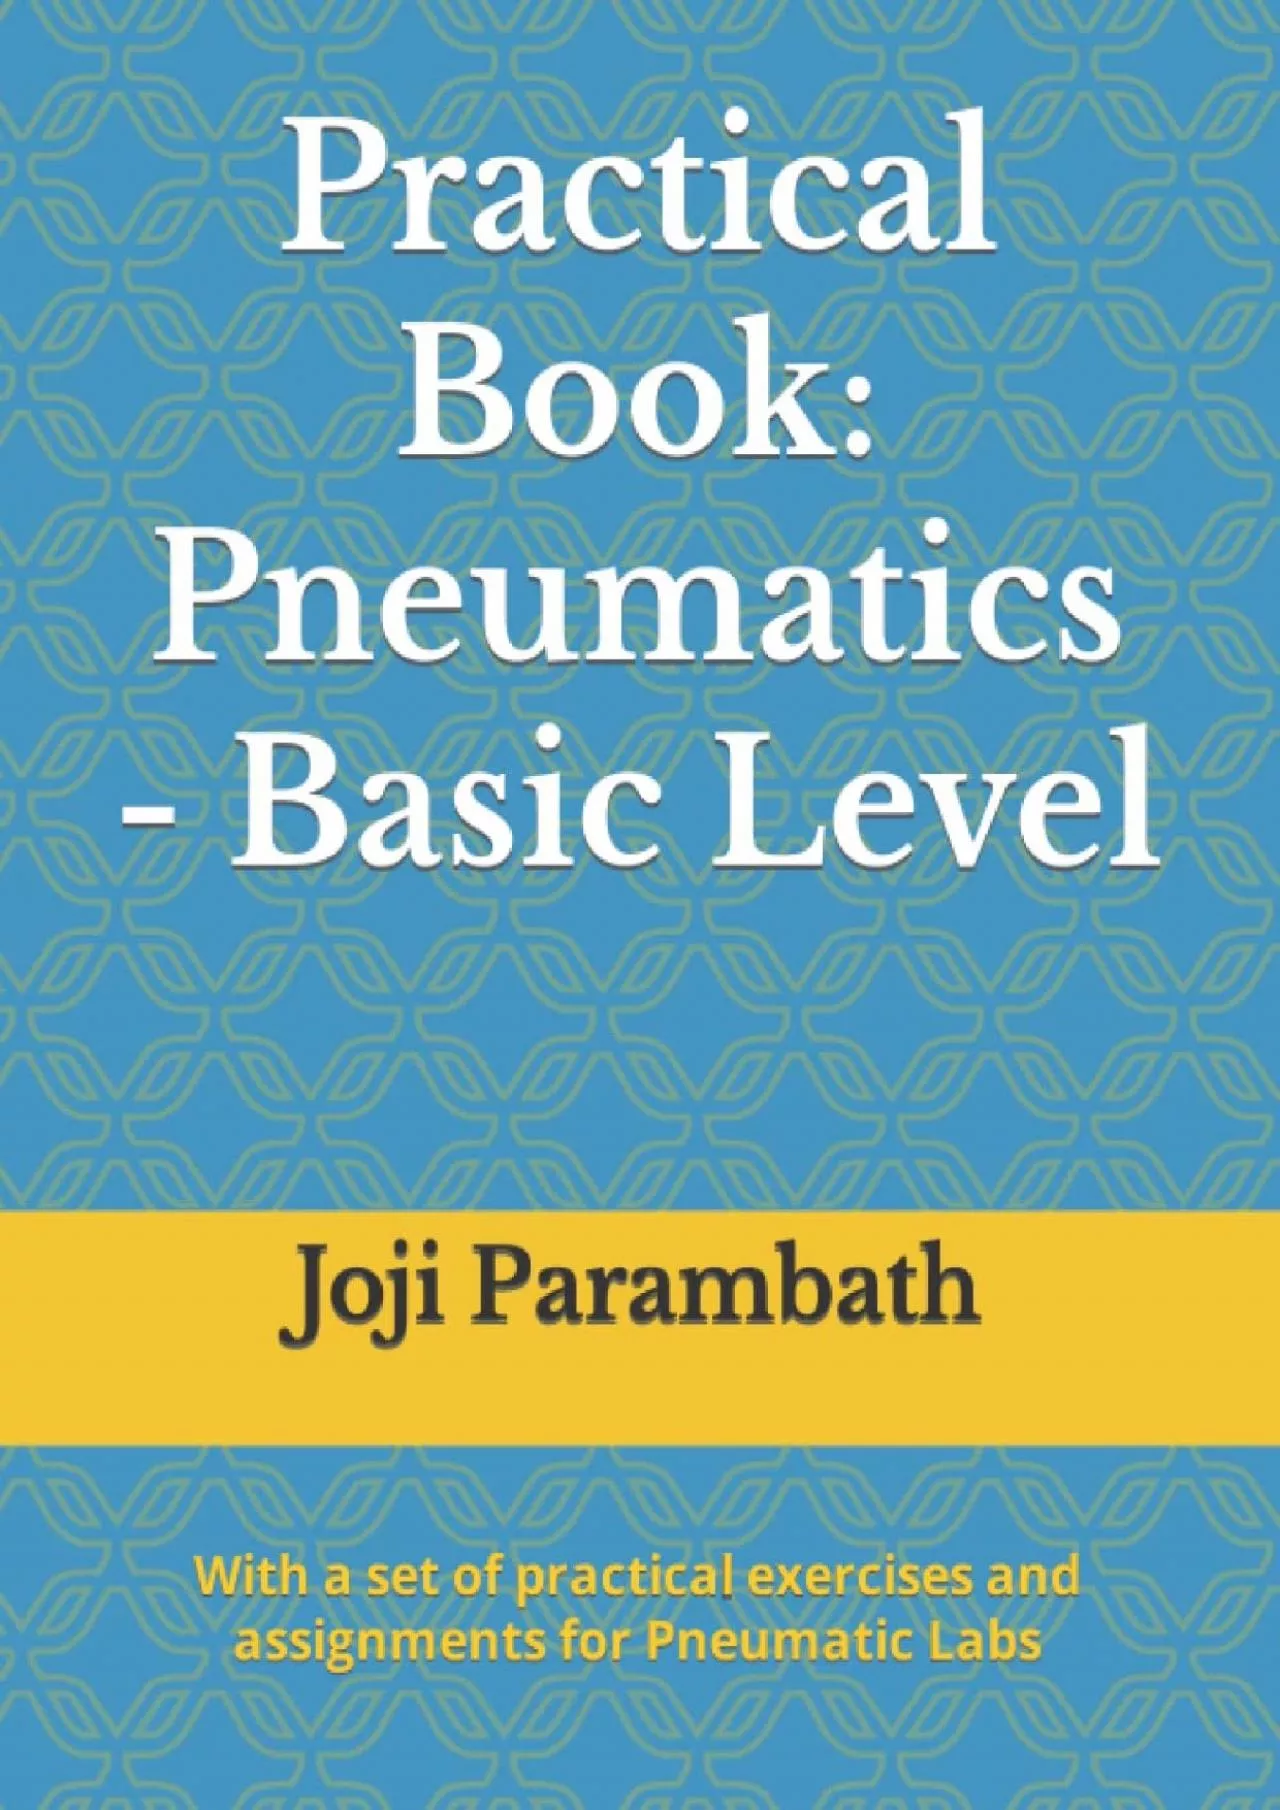 [DOWNLOAD] Practical Book: Pneumatics - Basic Level Industrial Hydraulics and Pneumatics